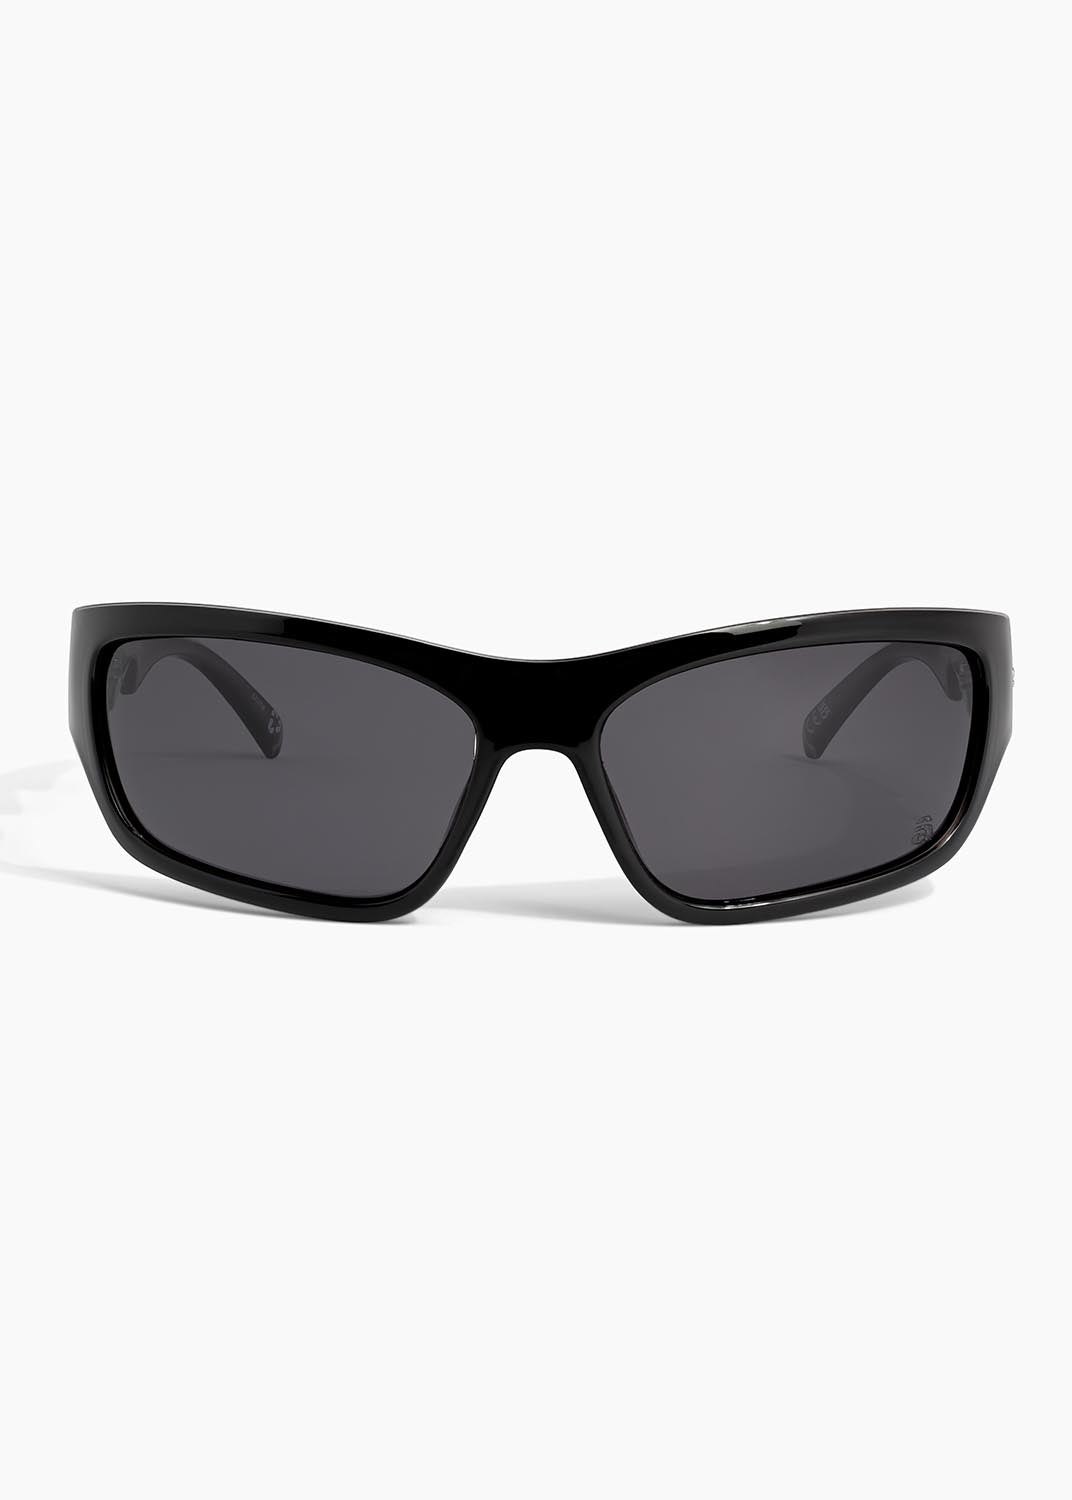 Gafas de sol recicladas Szade Bass ; Elysium Double Black / Ink Polarised en elysium double black / ink pol